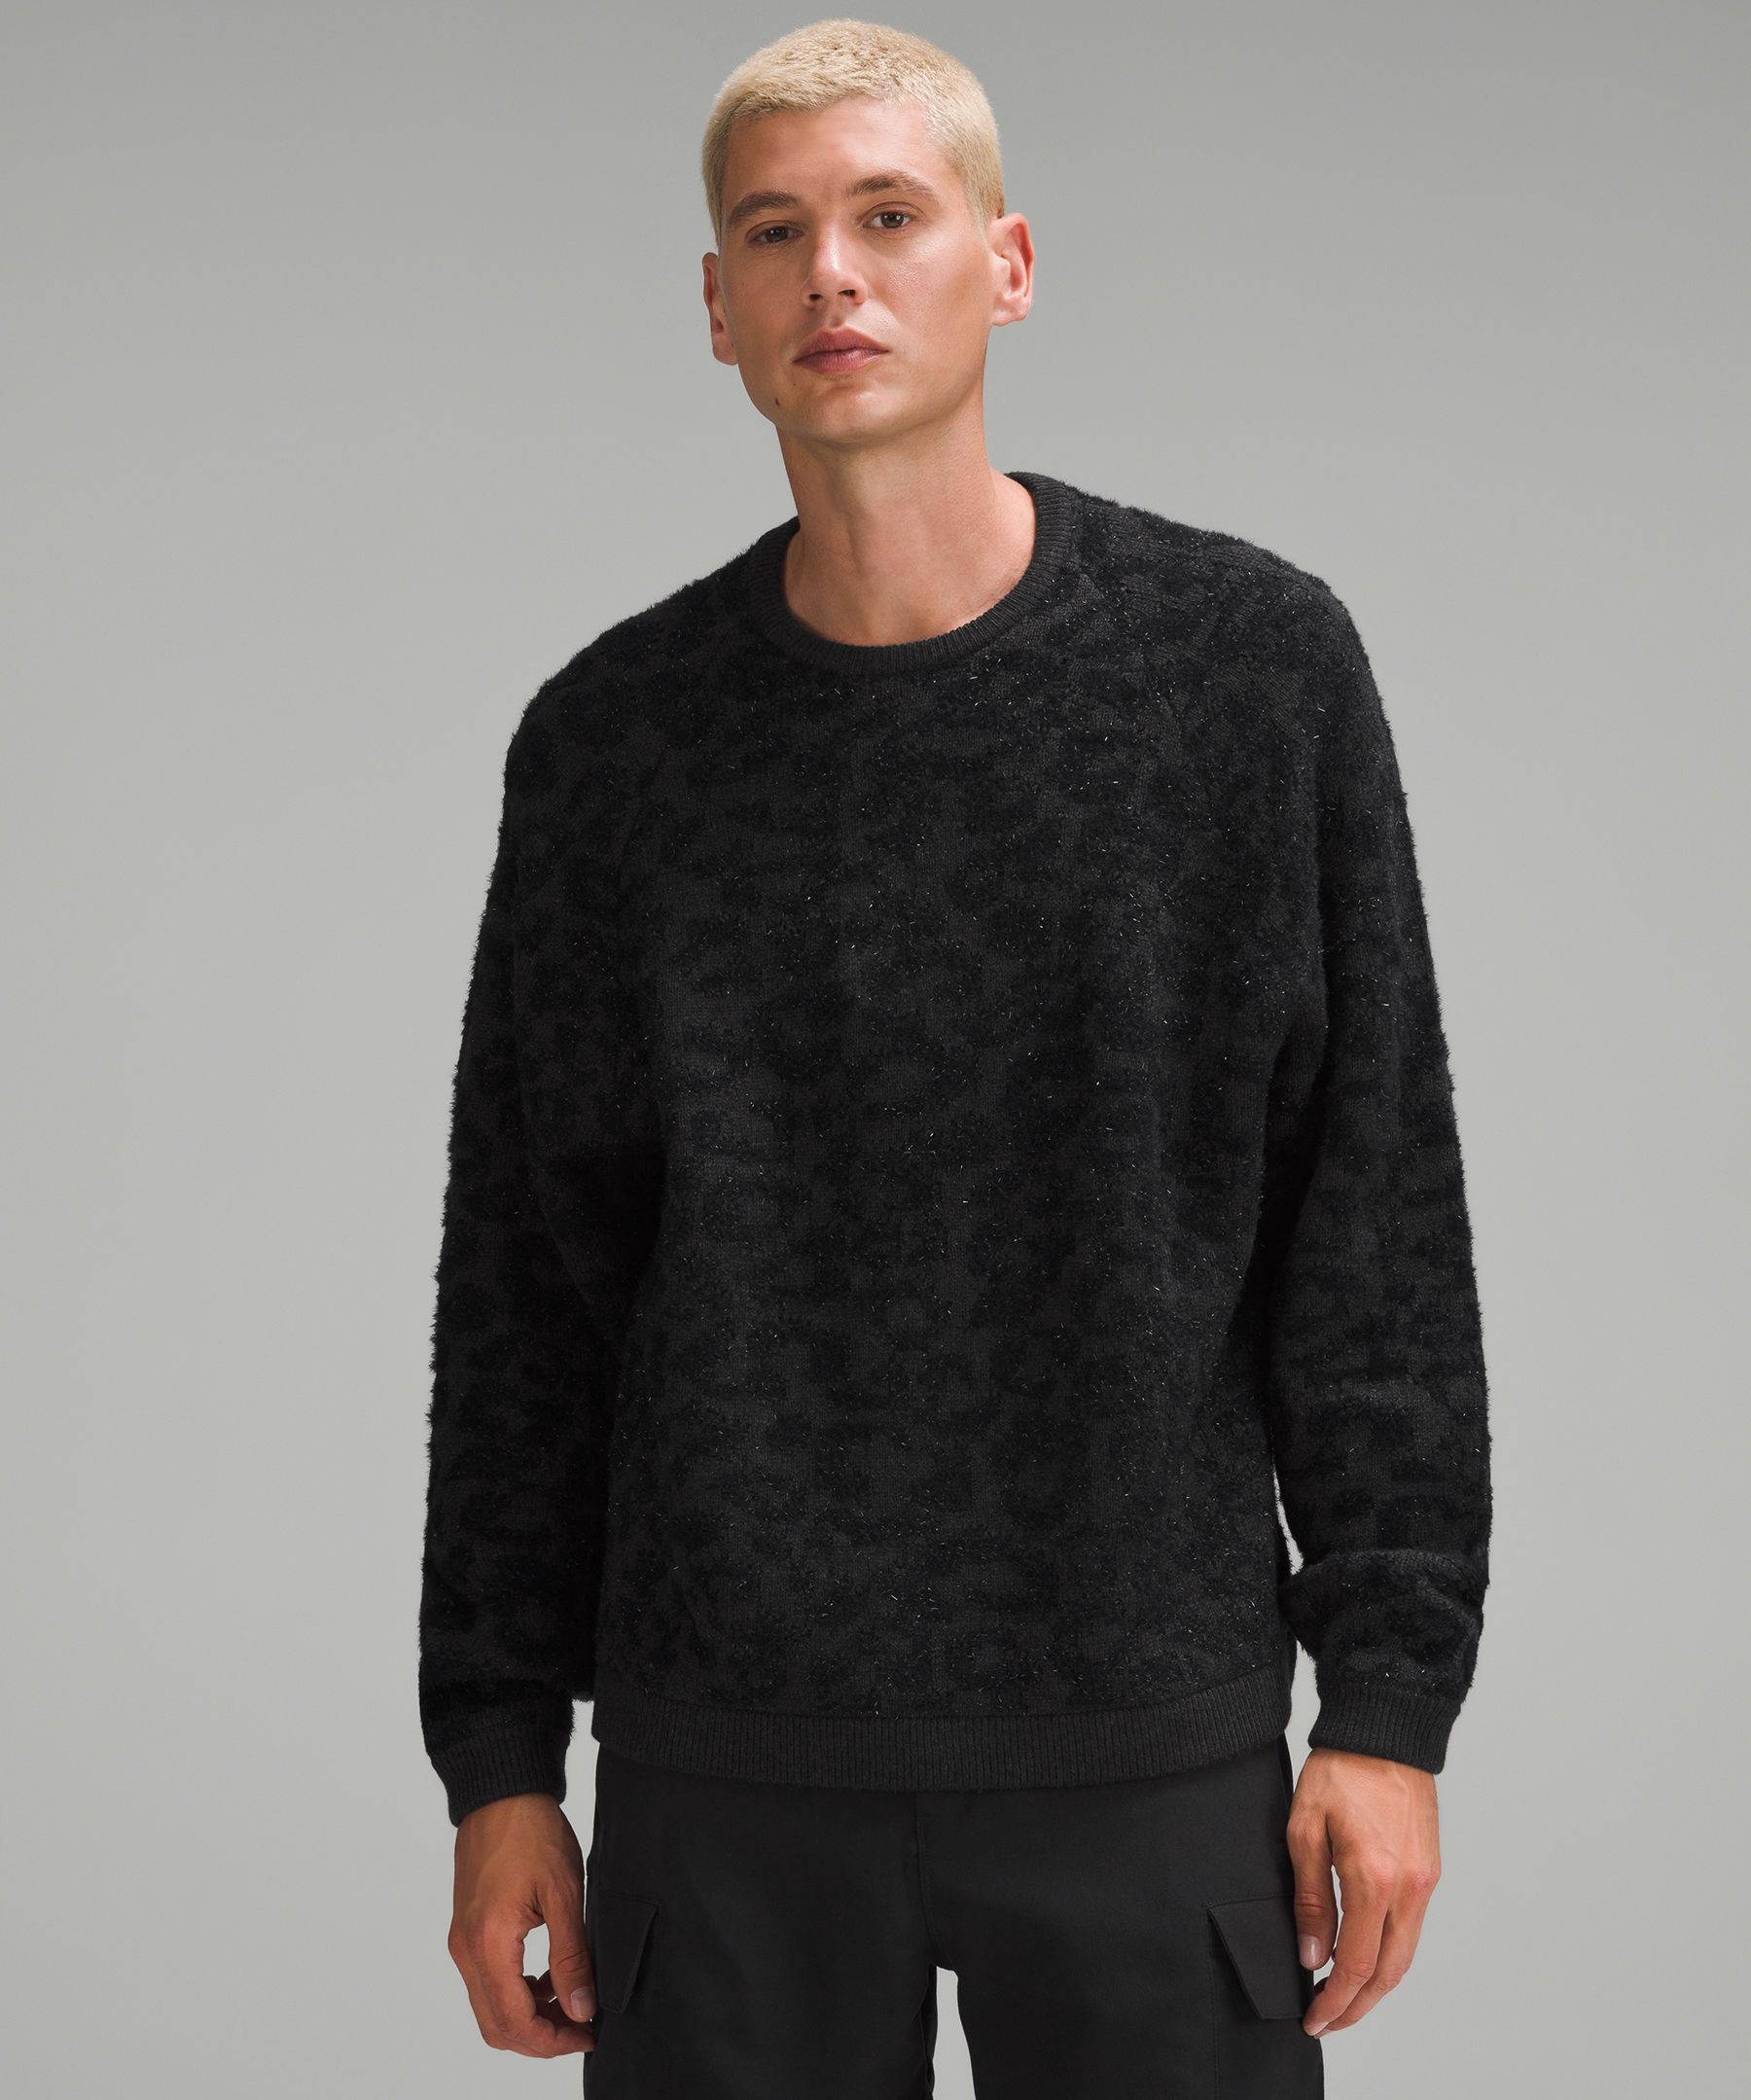 Too Plush Crewneck Sweater in Black